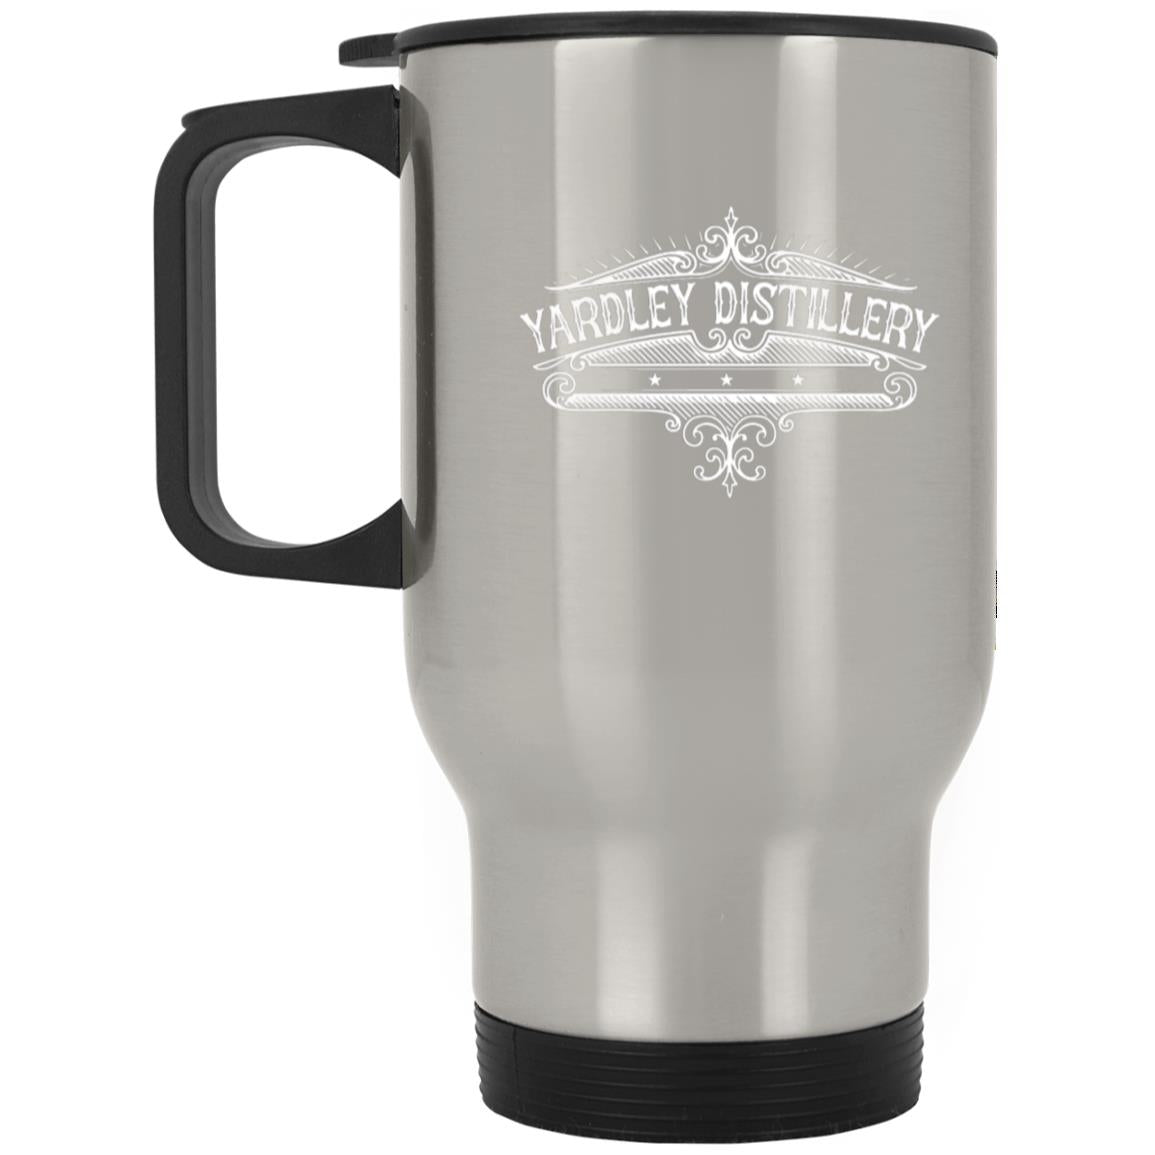 Yardley Distillery Logo 14oz. Stainless Steel Travel Mug